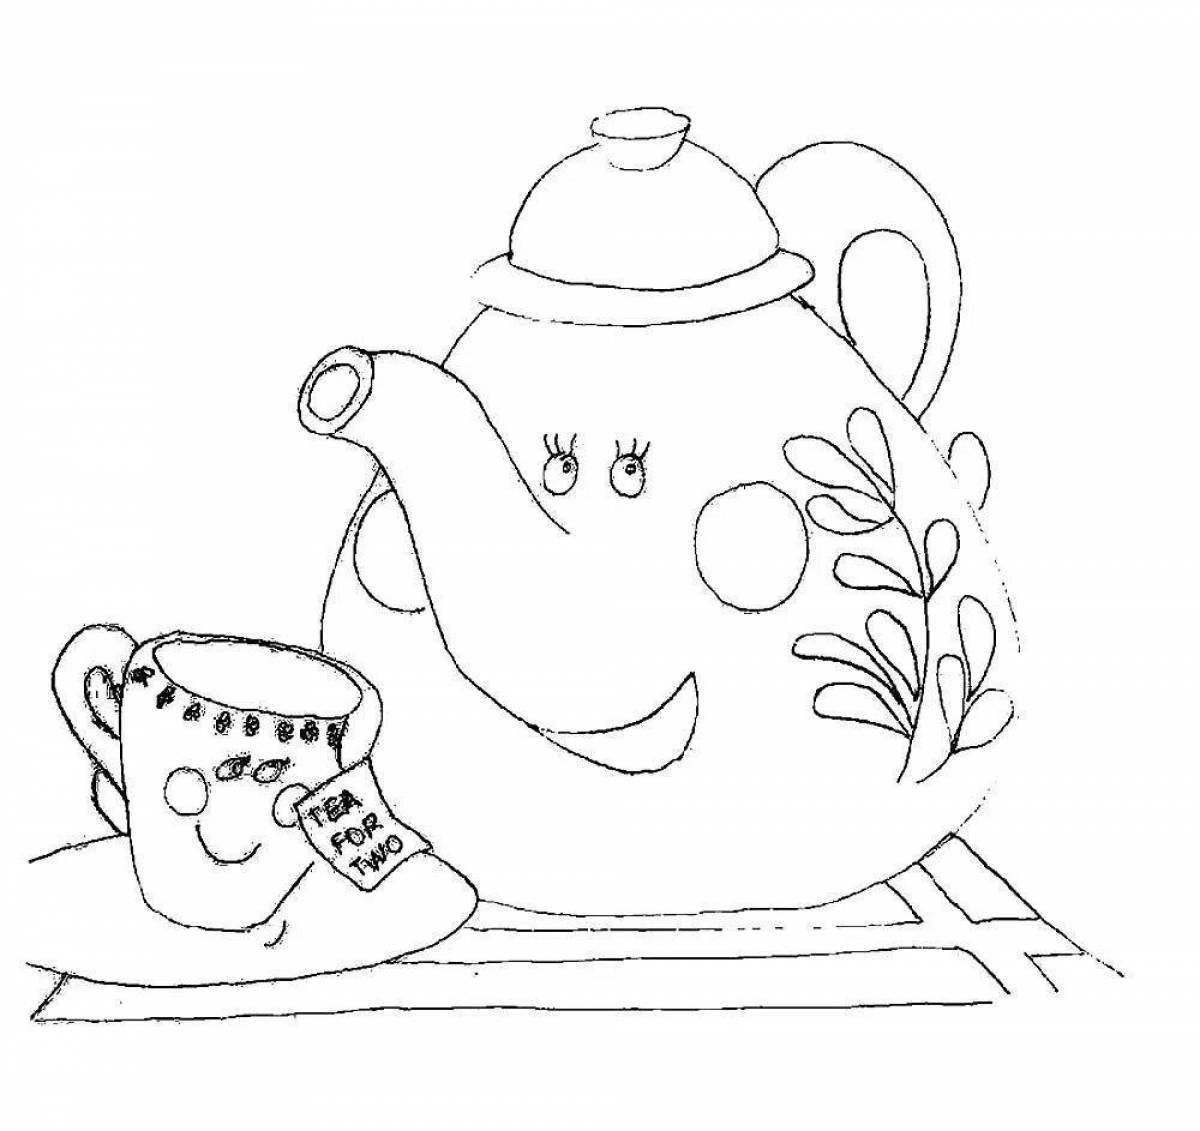 Colourful teapot and mug coloring page